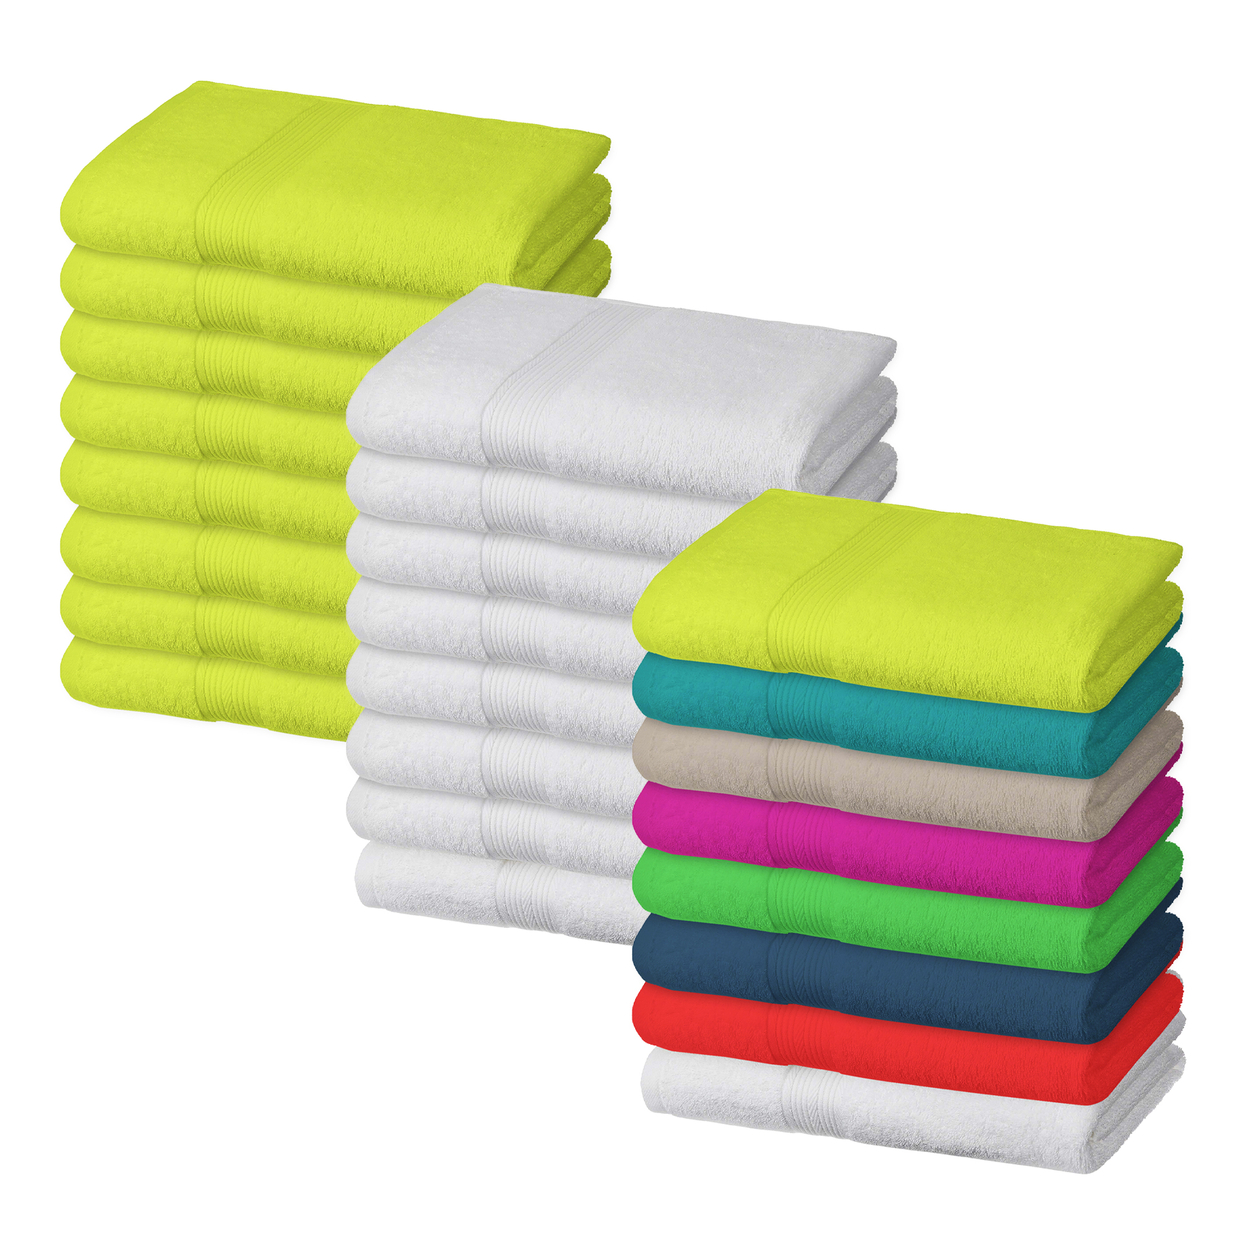 5-Pack: Super Absorbent 100% Cotton 54 X 27 Hotel Beach Bath Towels - Bright